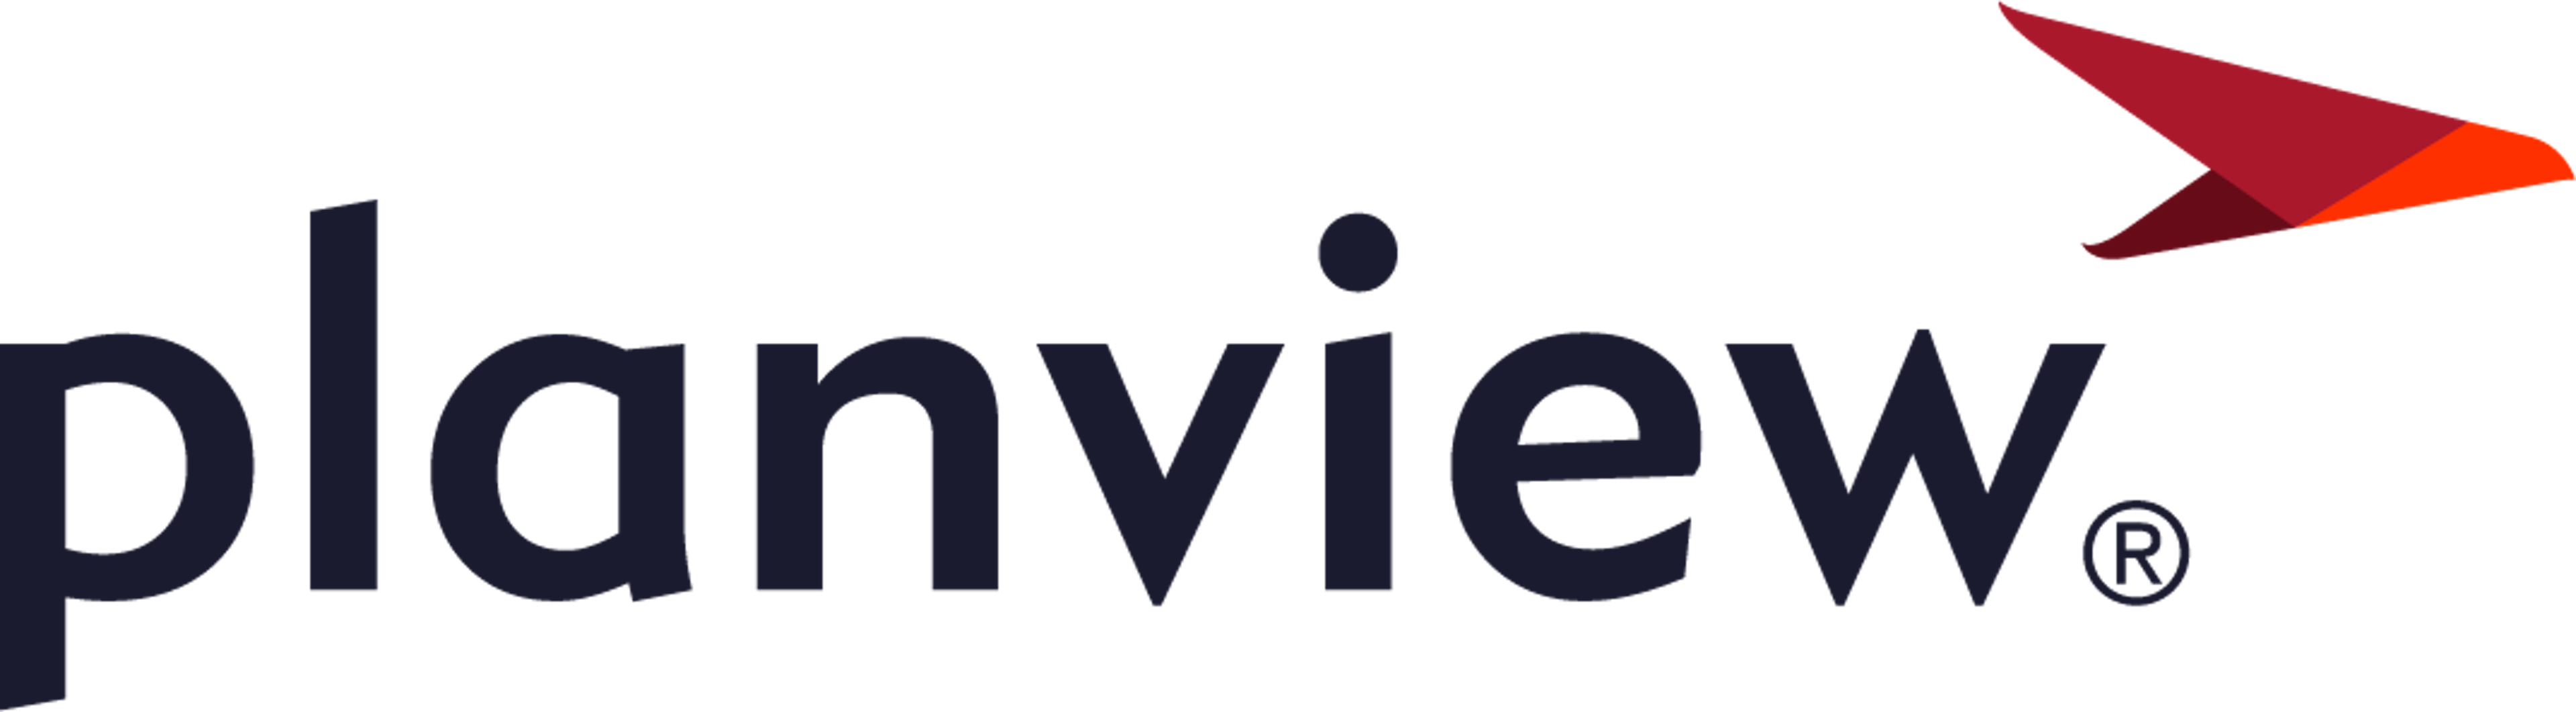 Planview IdeaPlace Logo